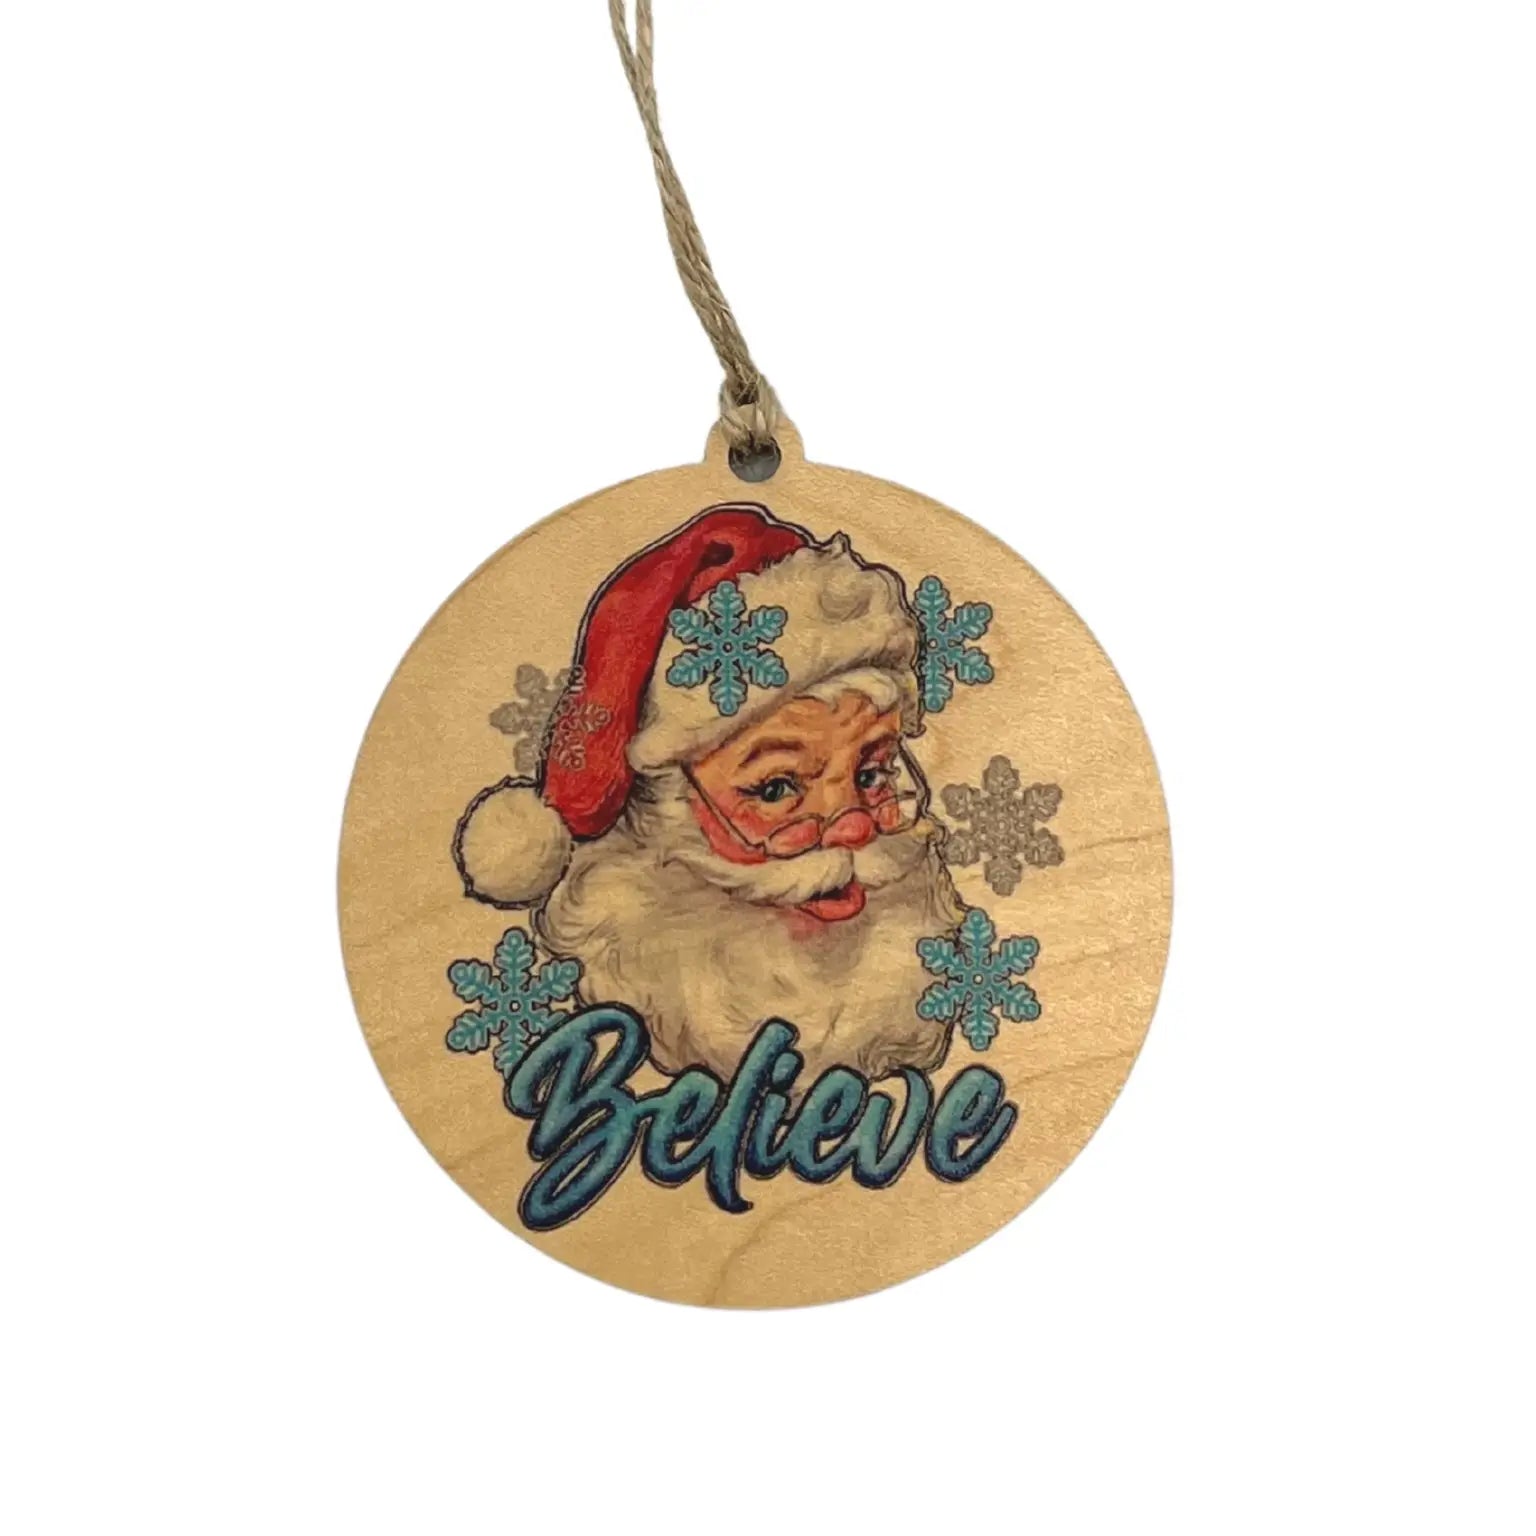 Believe Santa Wood Ornament